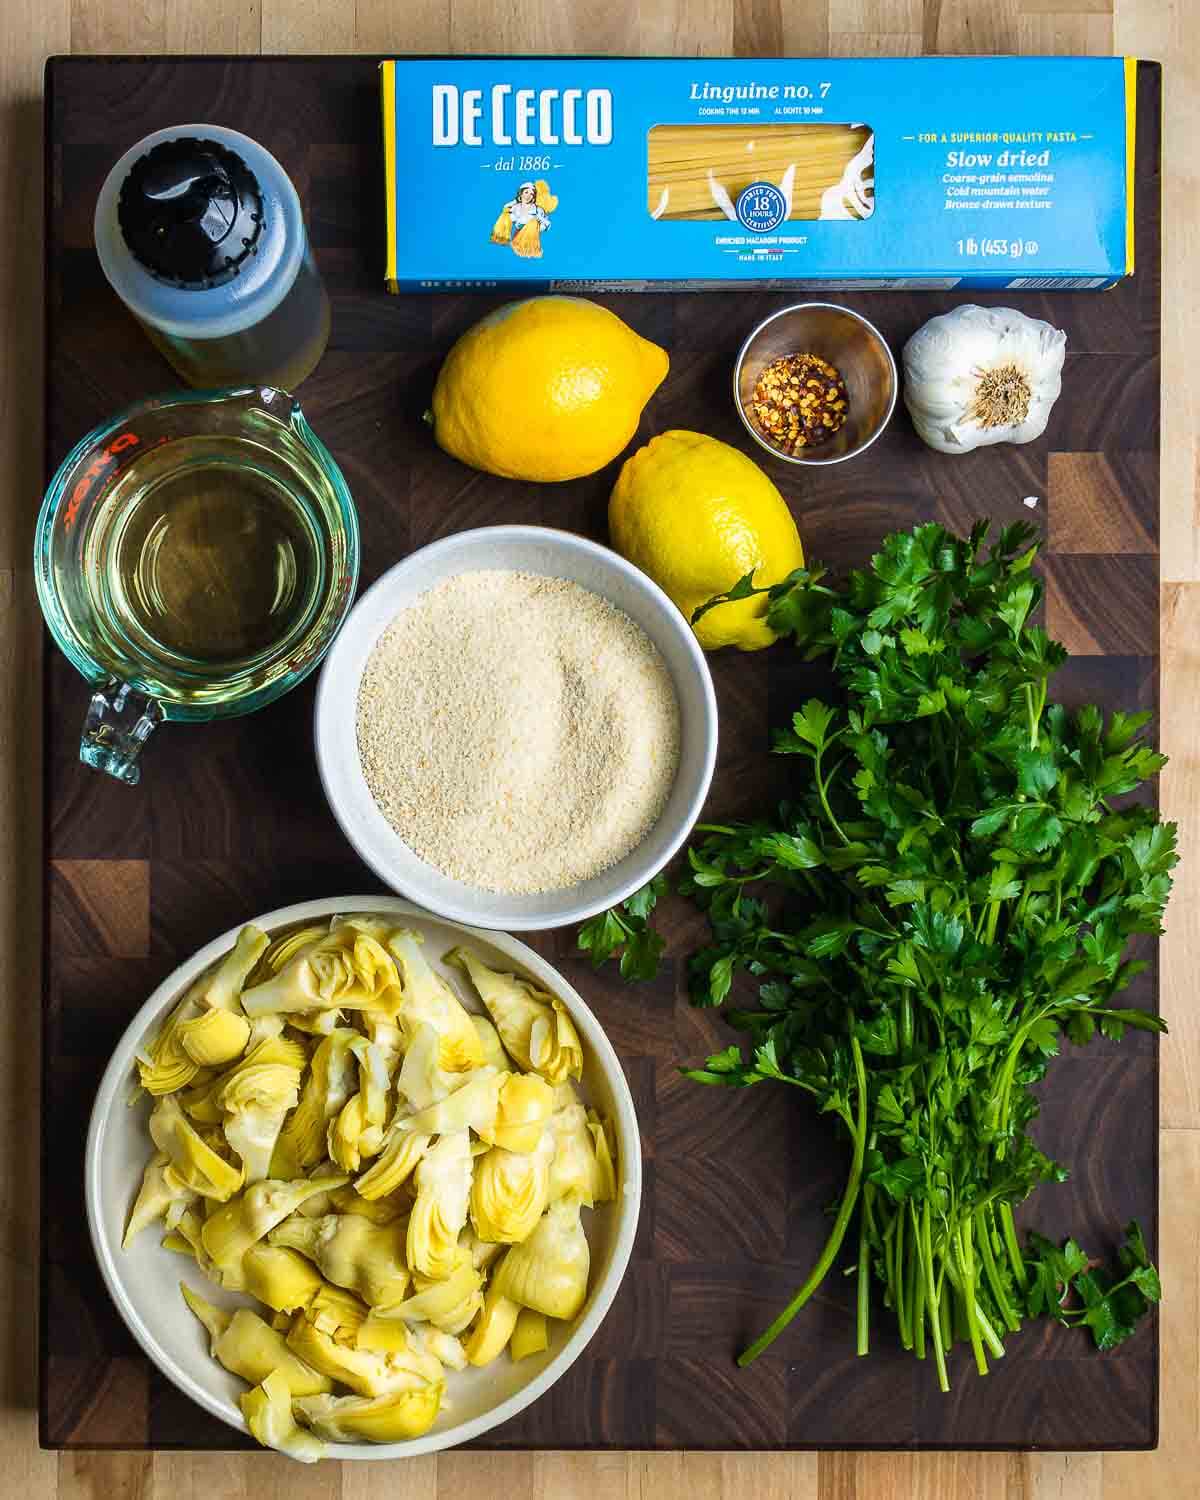 Ingredients shown: linguine, olive oil, lemons, white wine, parsley, garlic, breadcrumbs, and artichoke hearts.